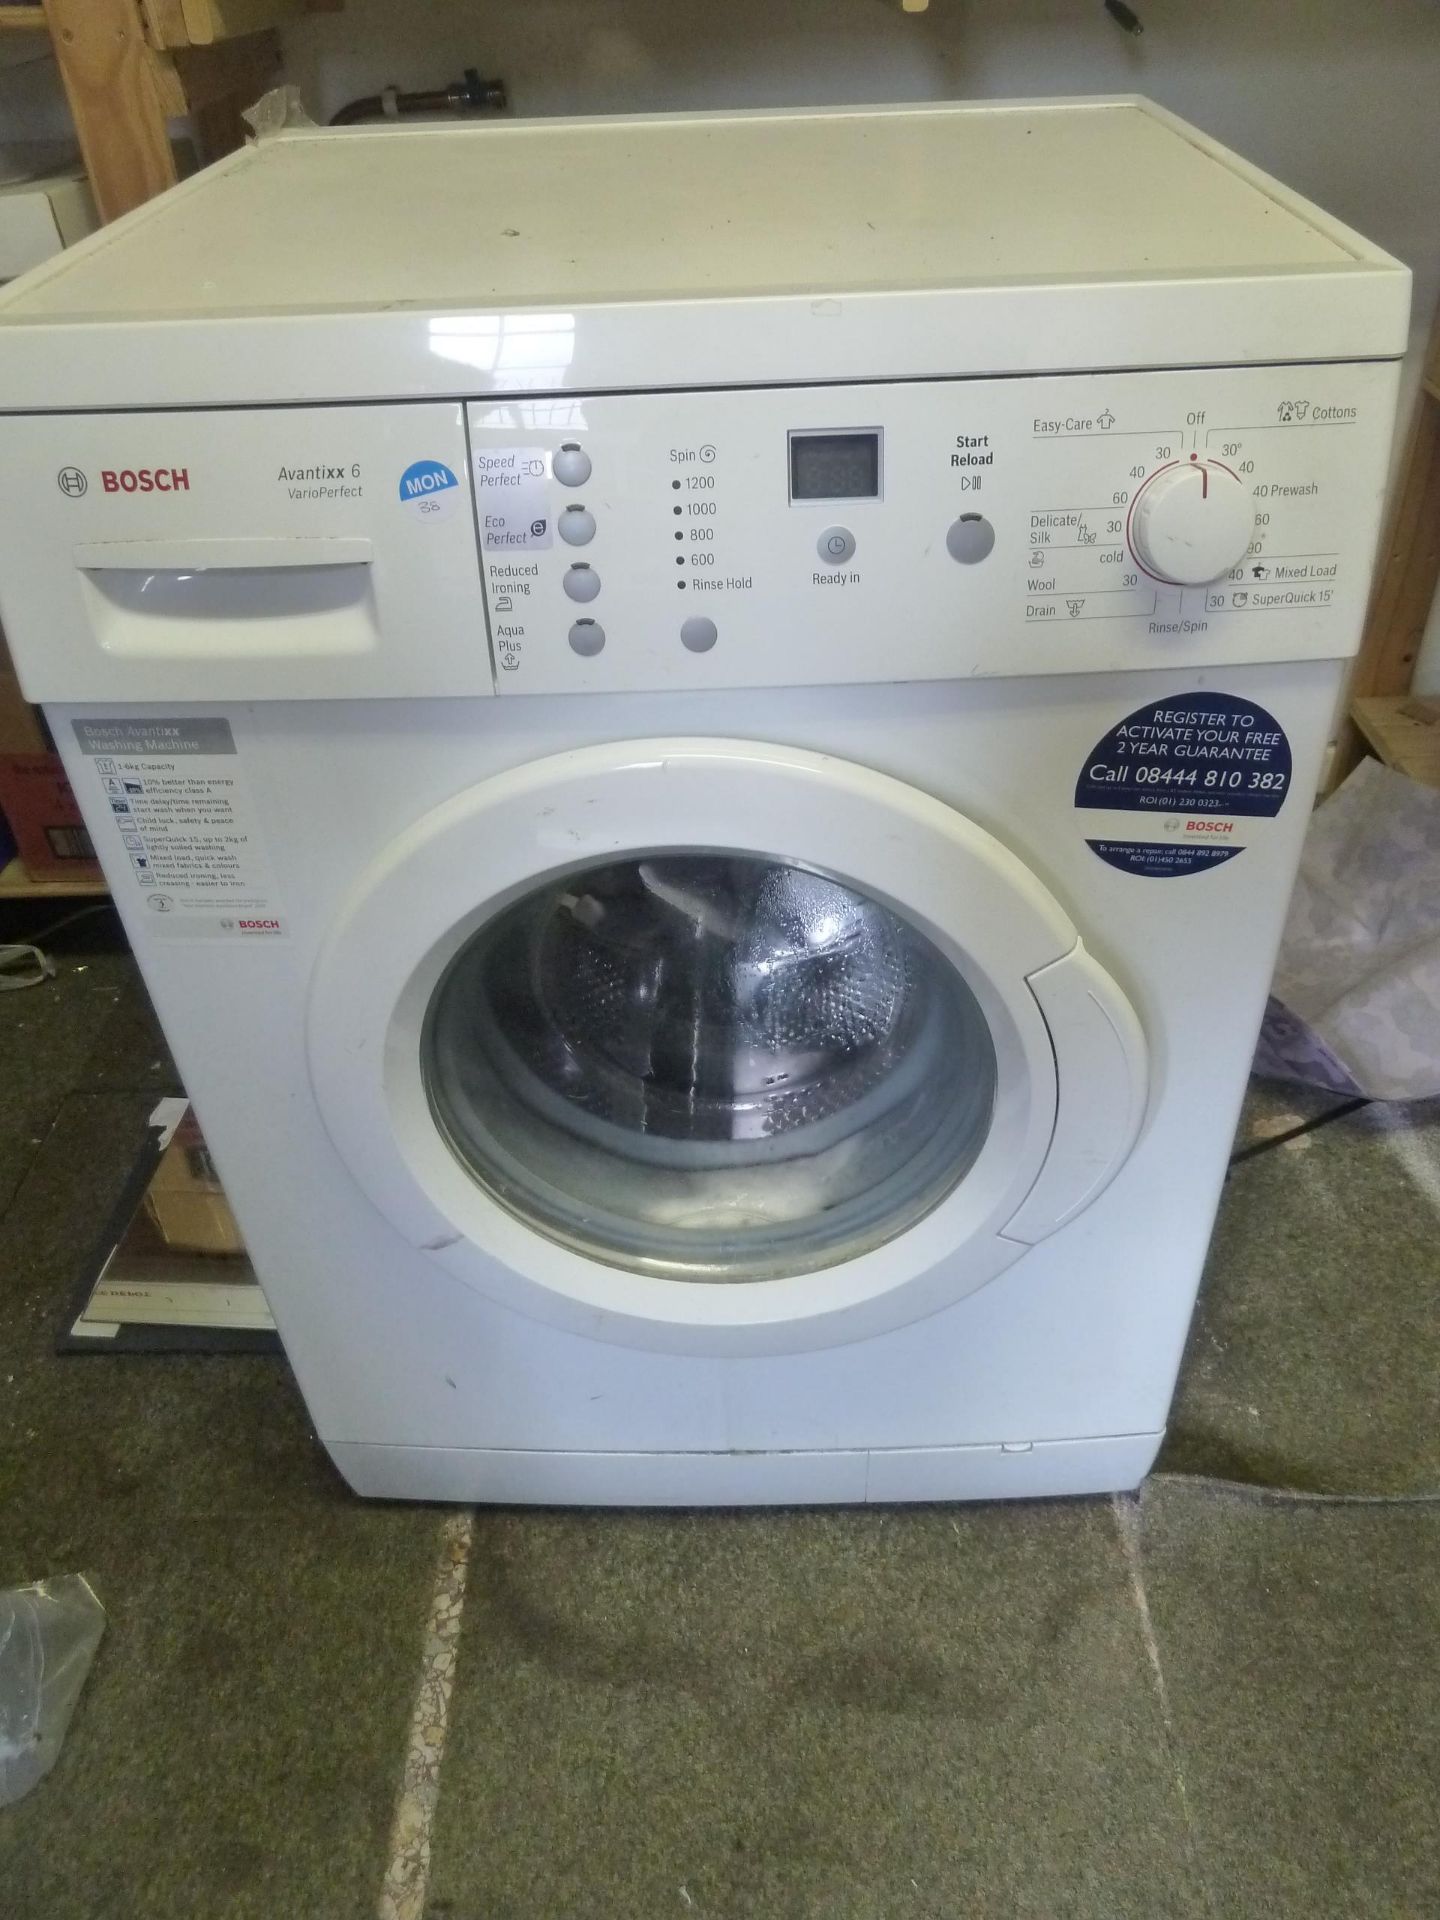 *Bosch Avantixx6 Vario Perfect washing machine